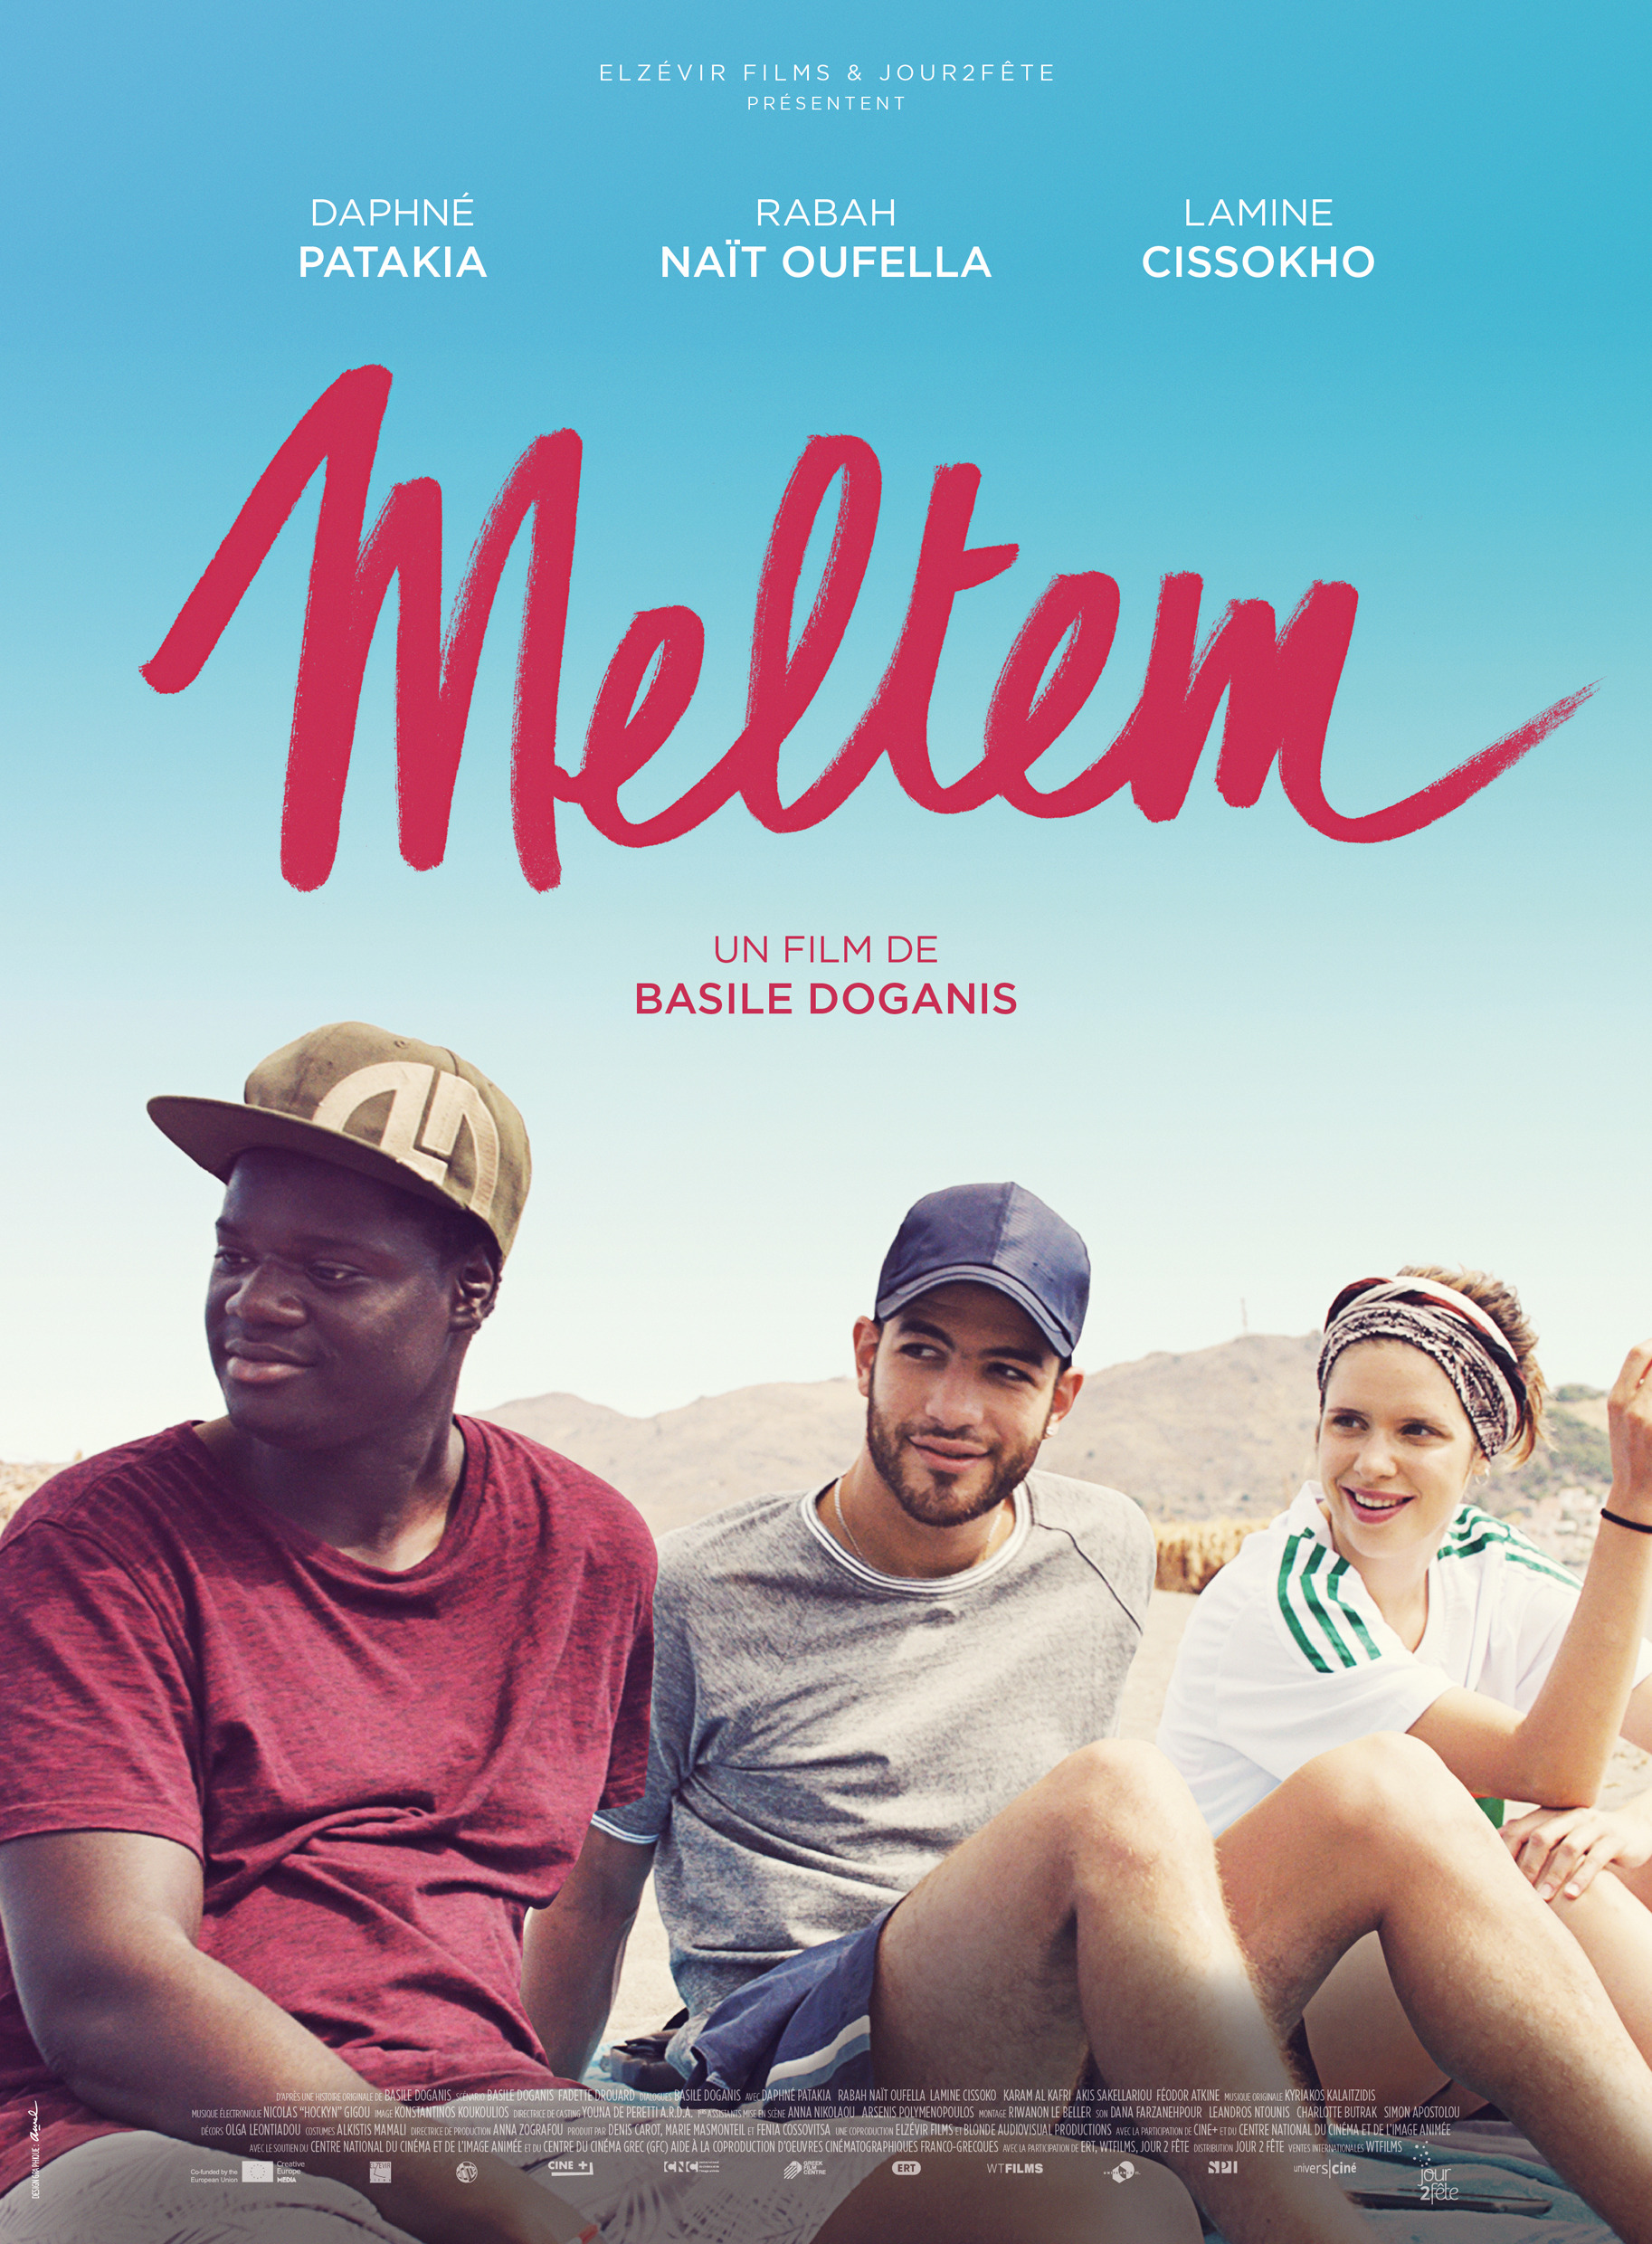 Mega Sized Movie Poster Image for Meltem 